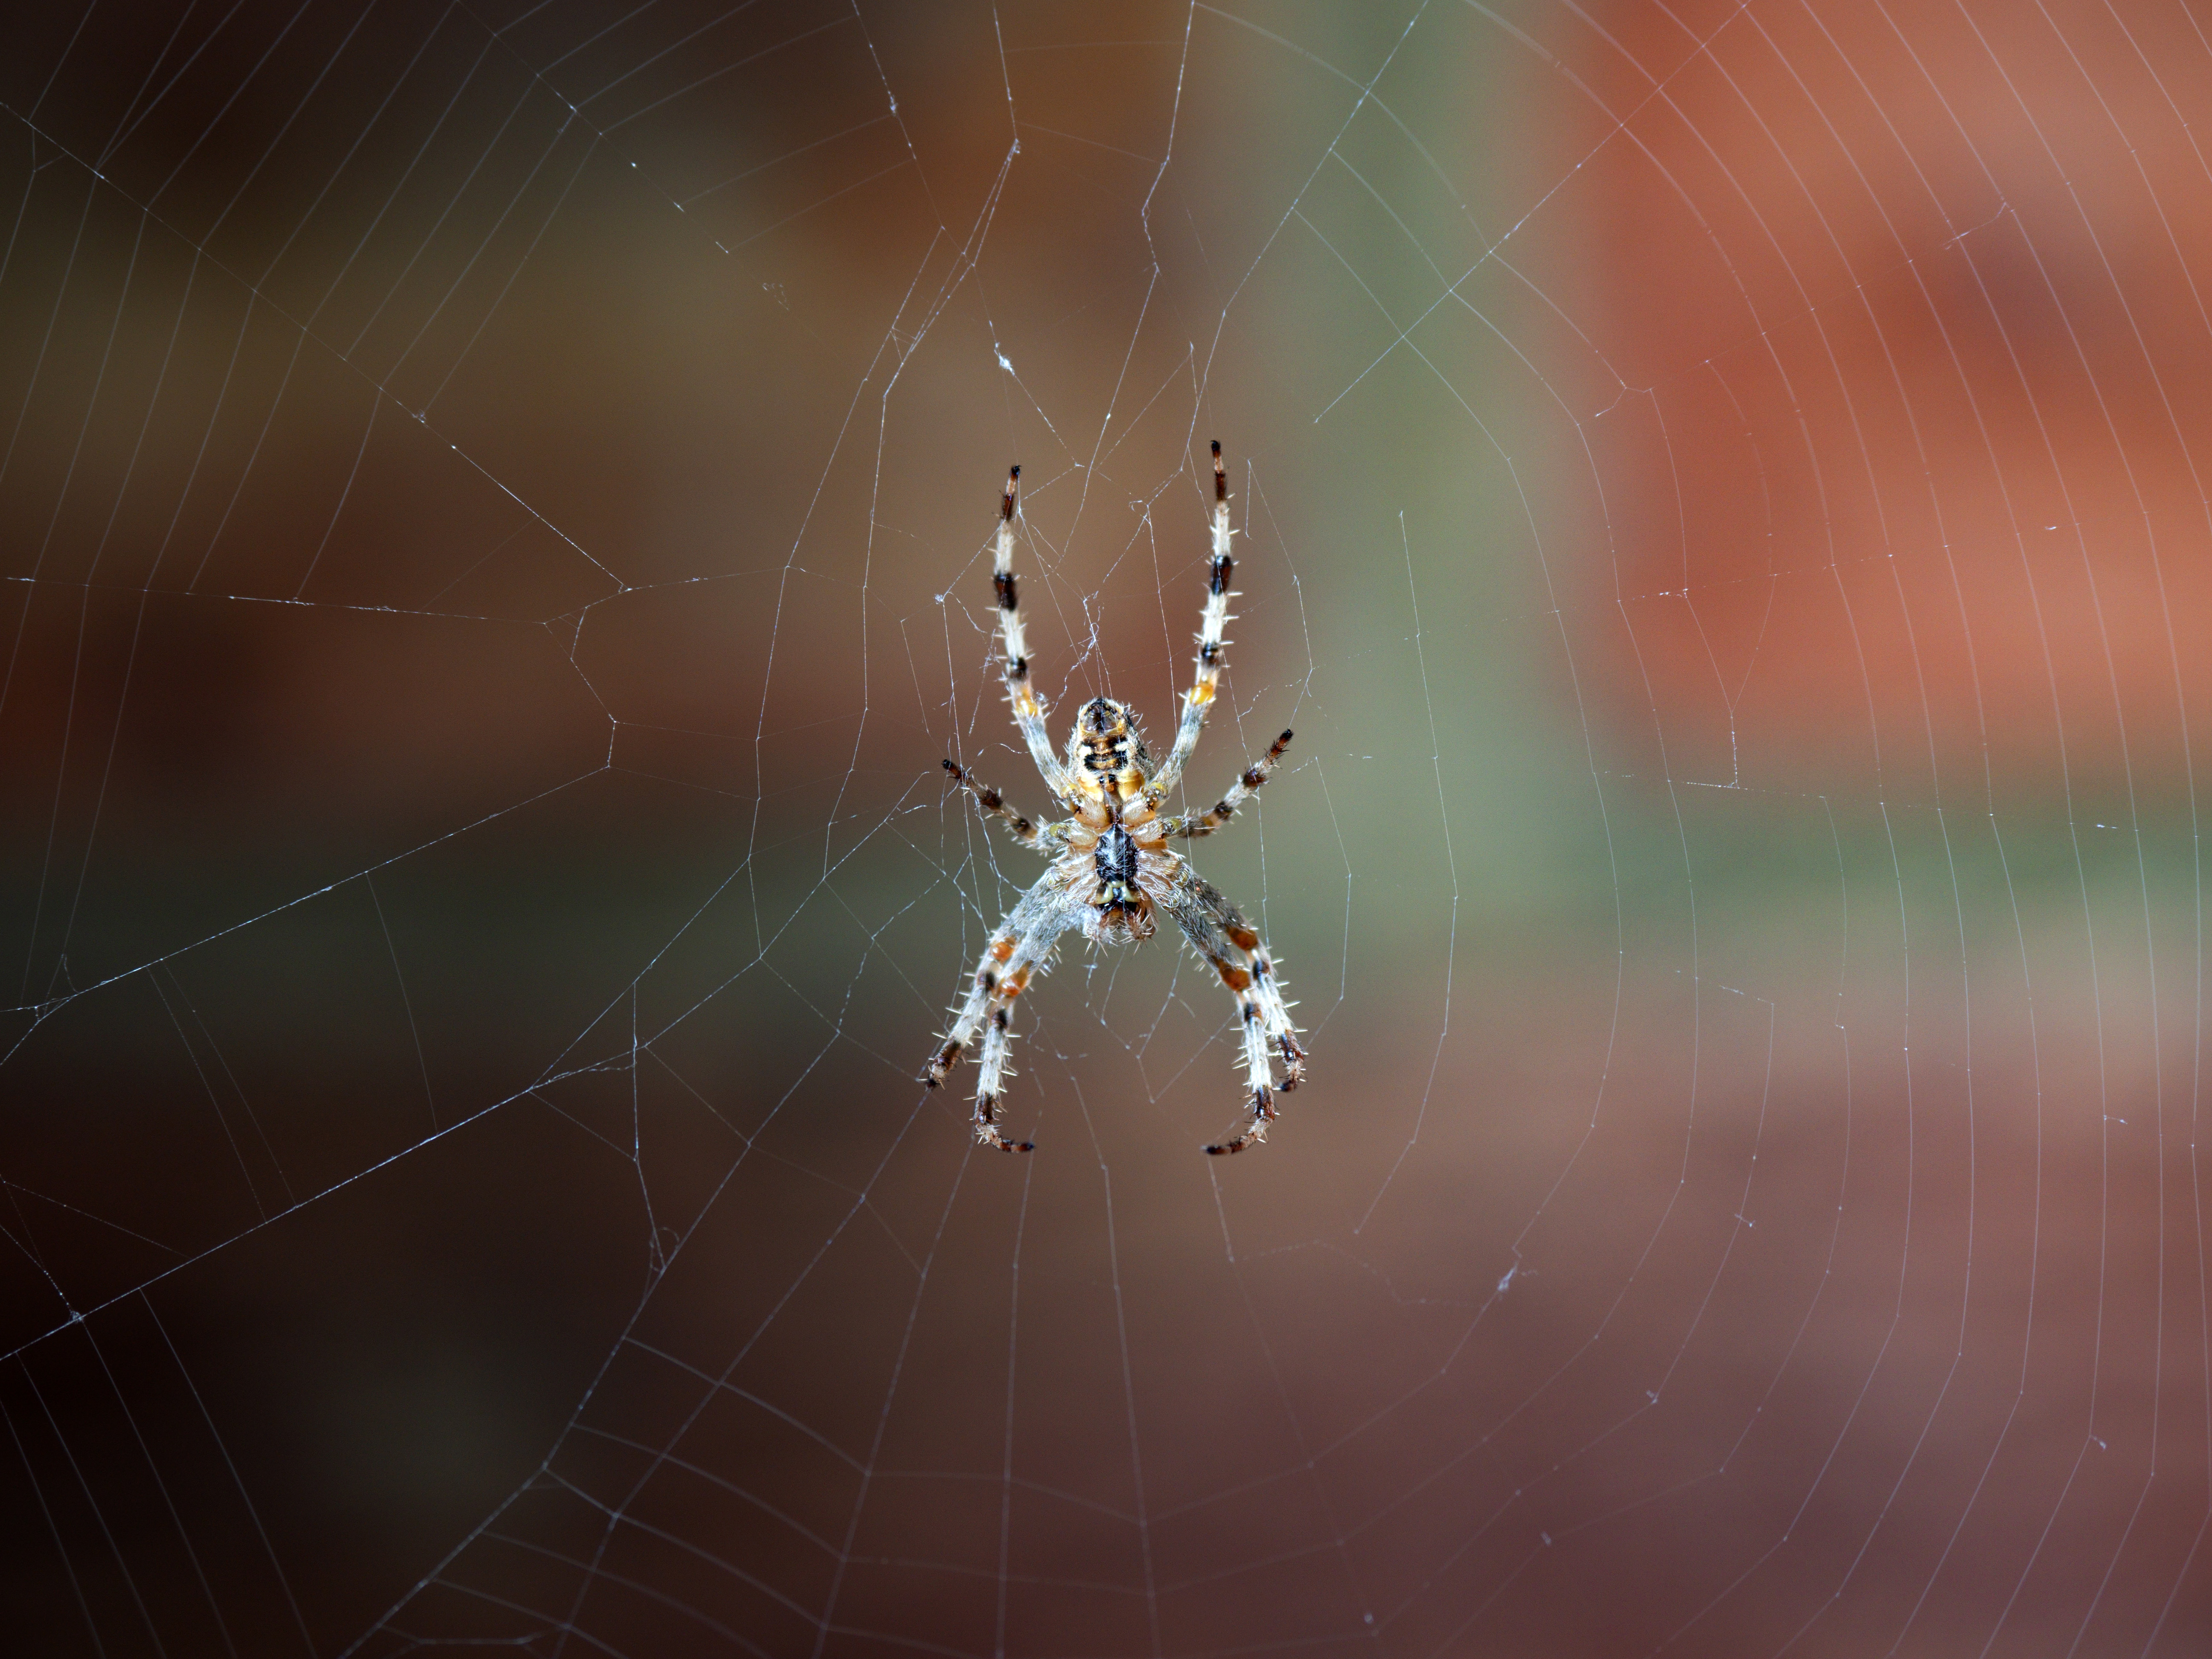 web, macro, close up, spider